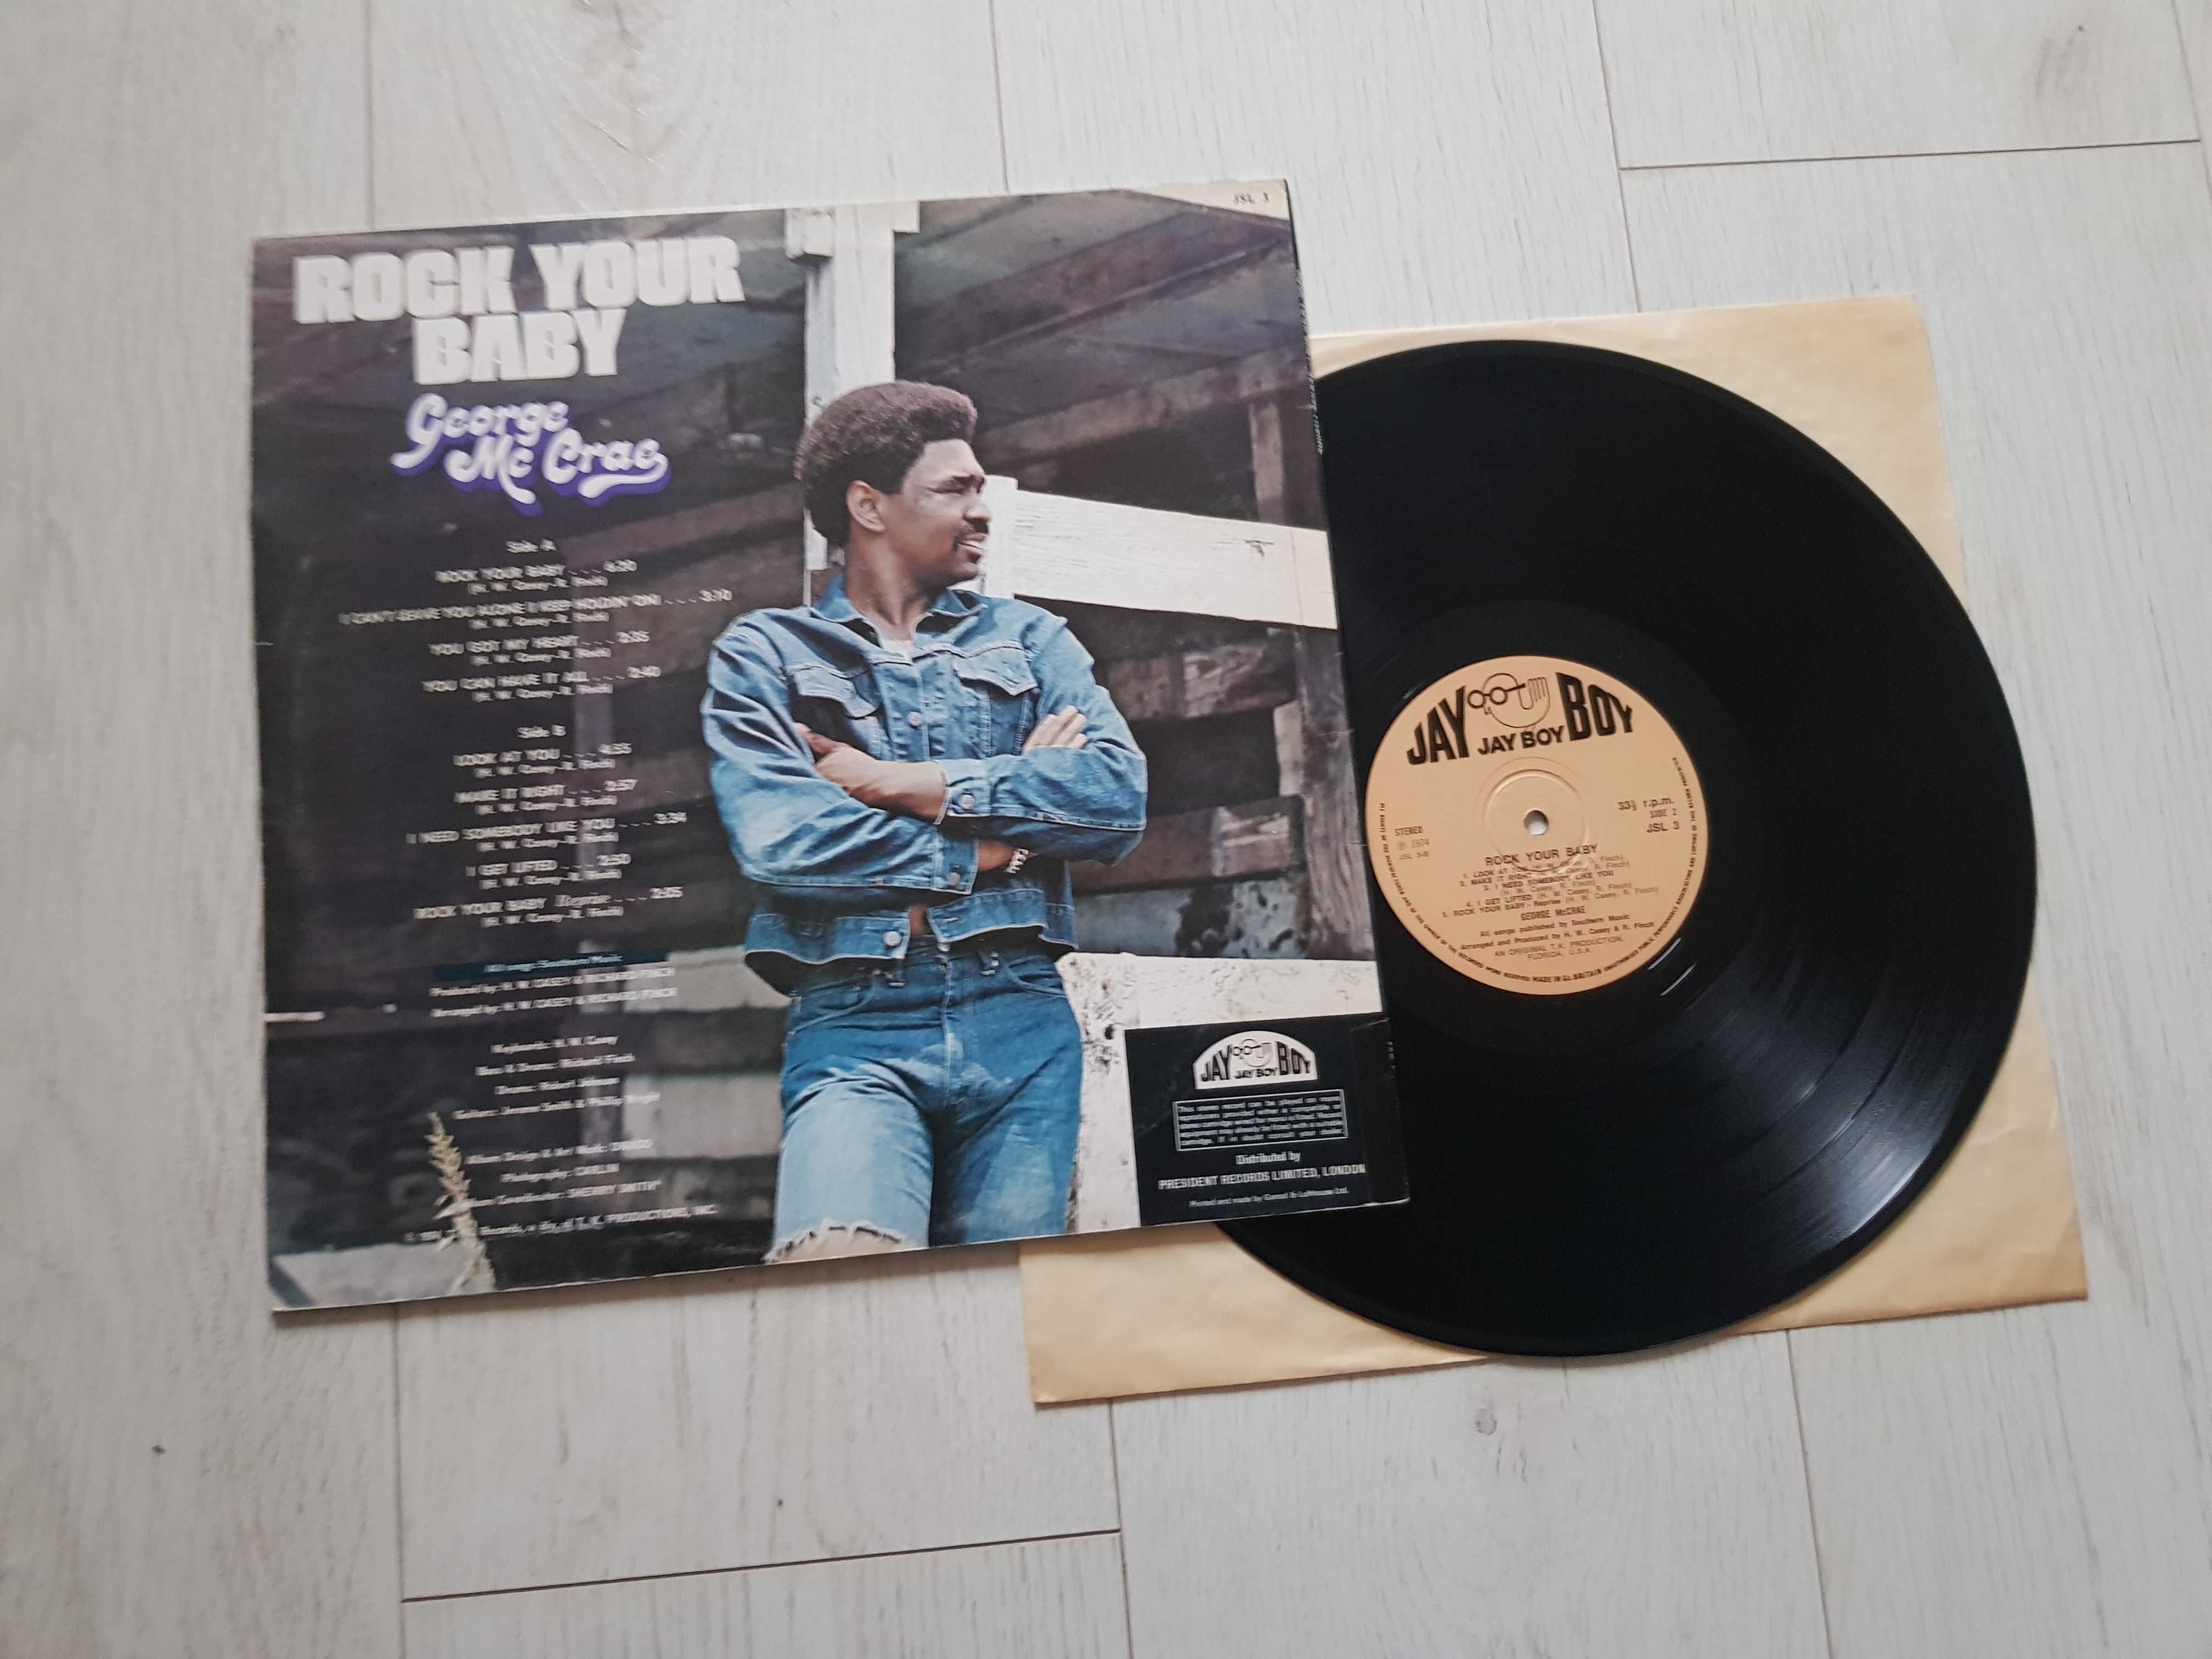 George McCrae – Rock Your Baby LP*4467